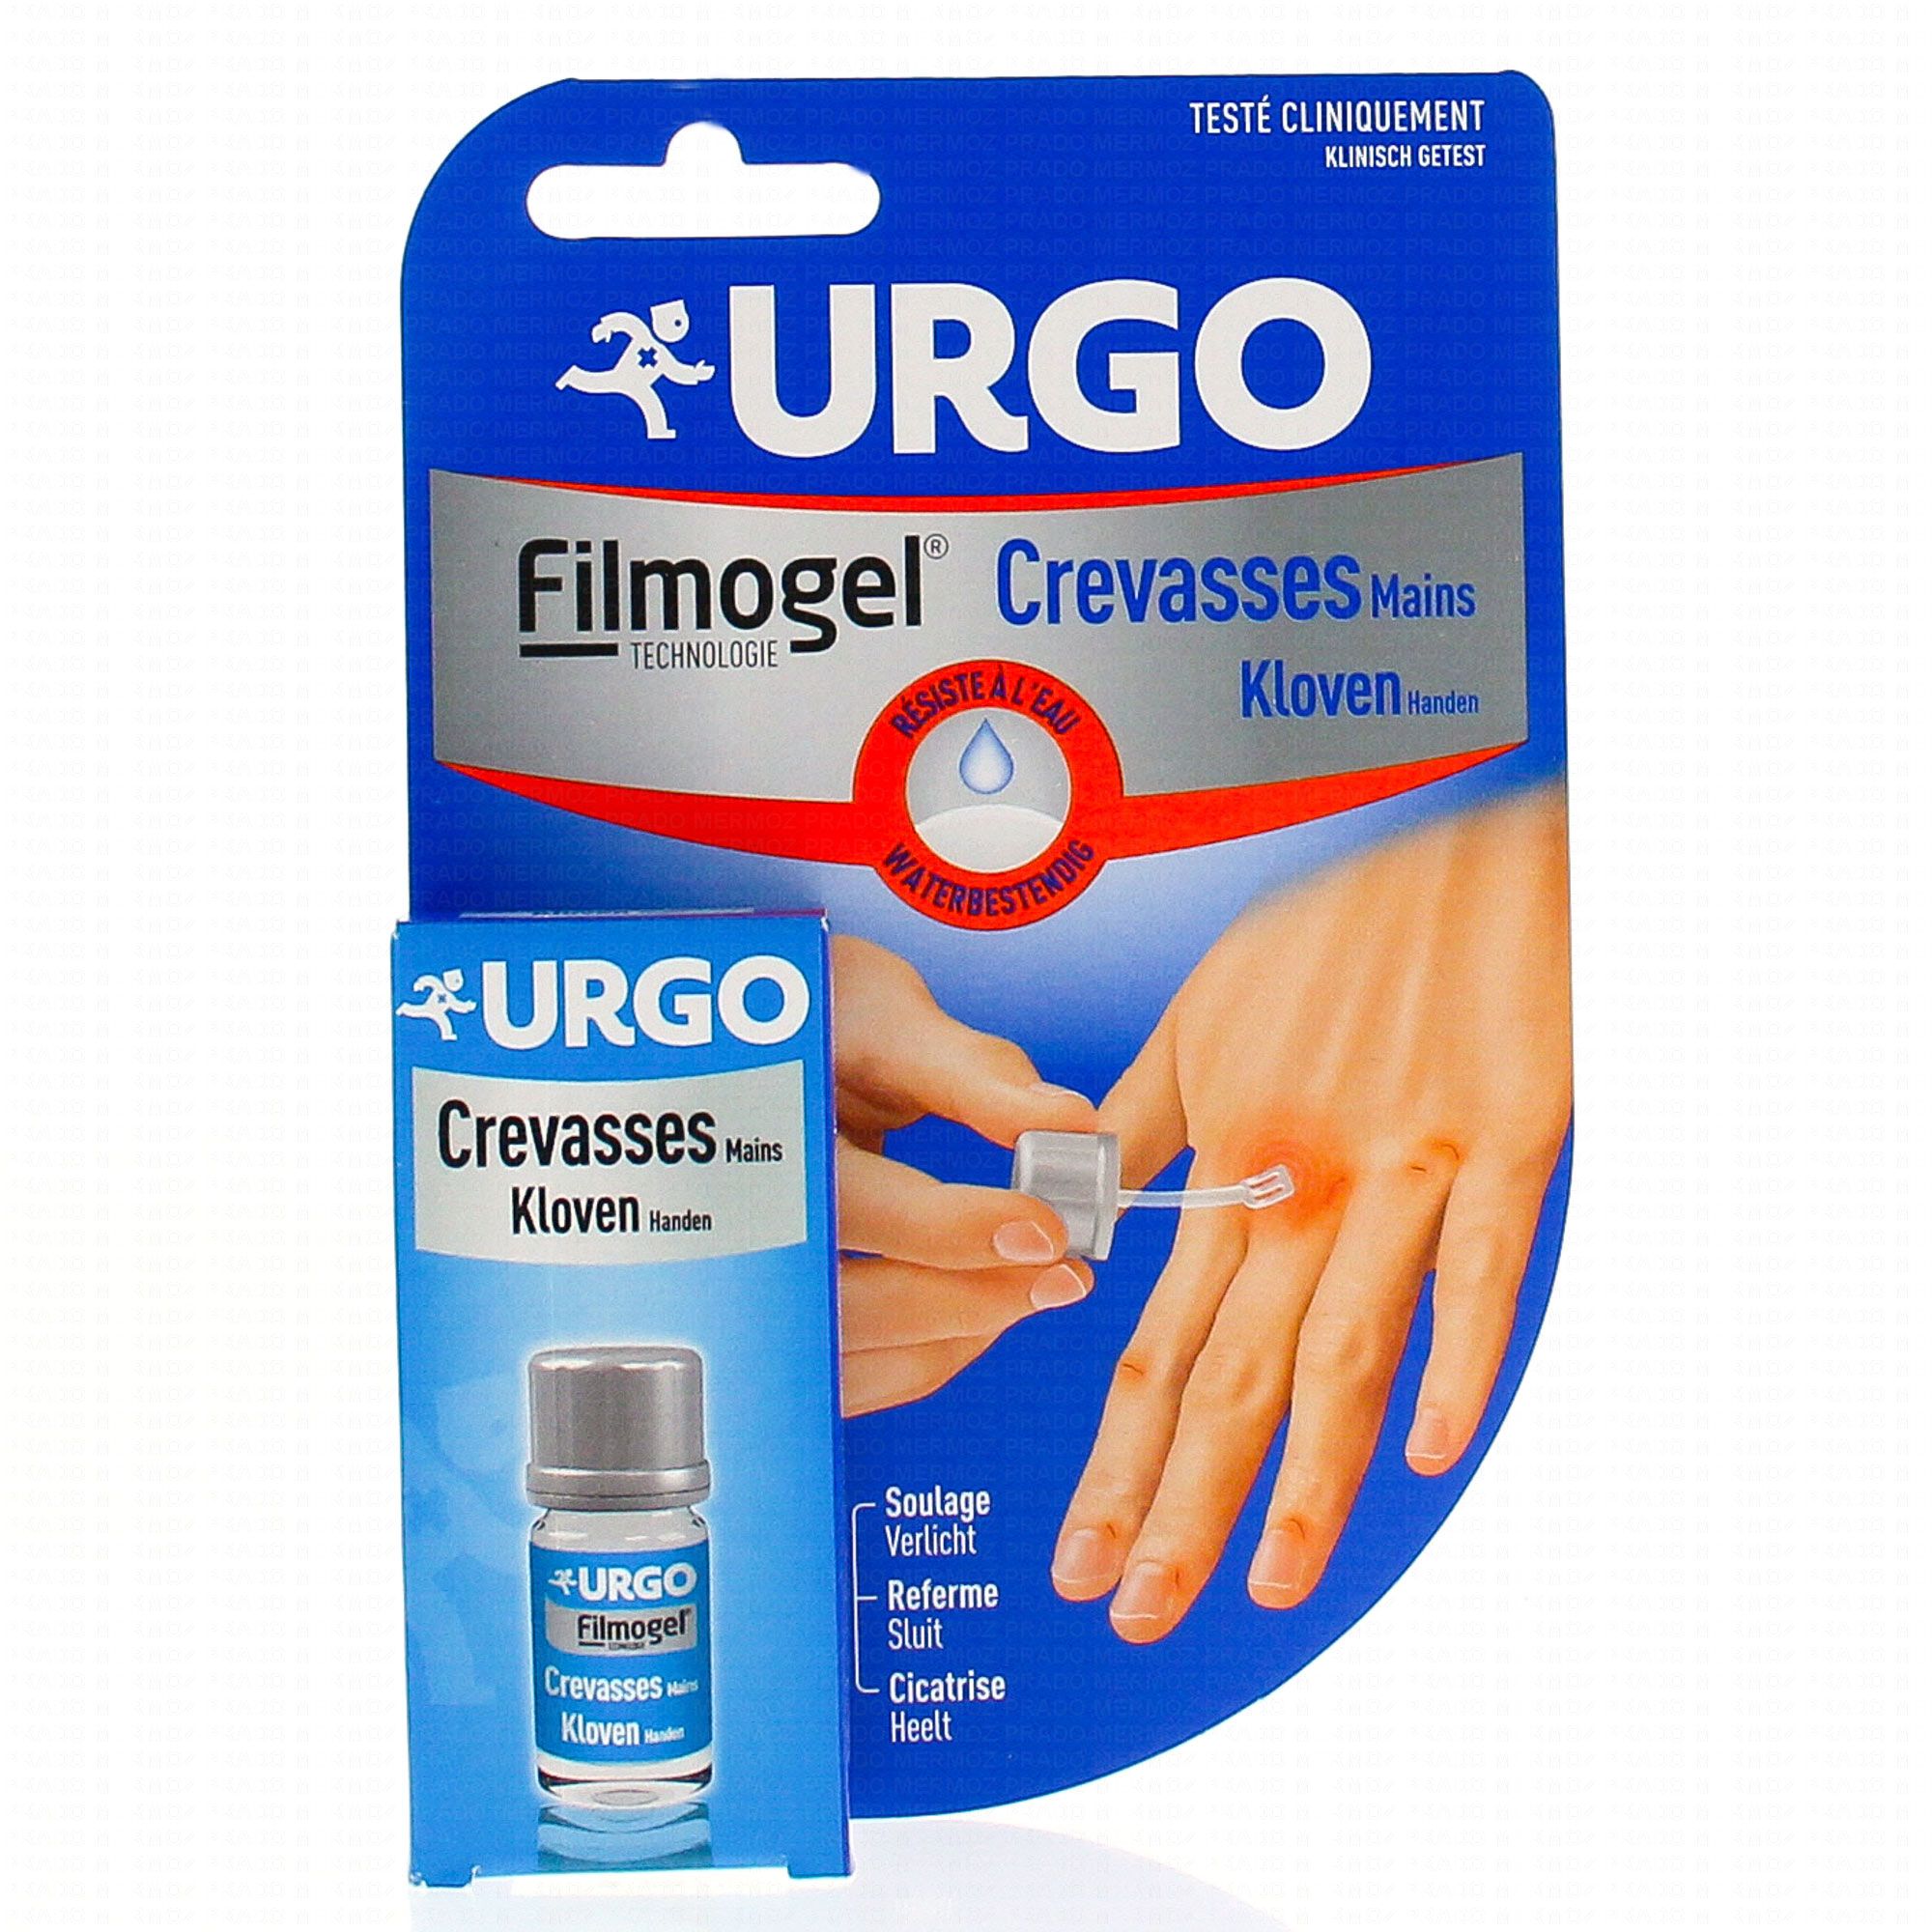 URGO Filmogel crevasses mains flacon 3,25ml - Parapharmacie Prado Mermoz